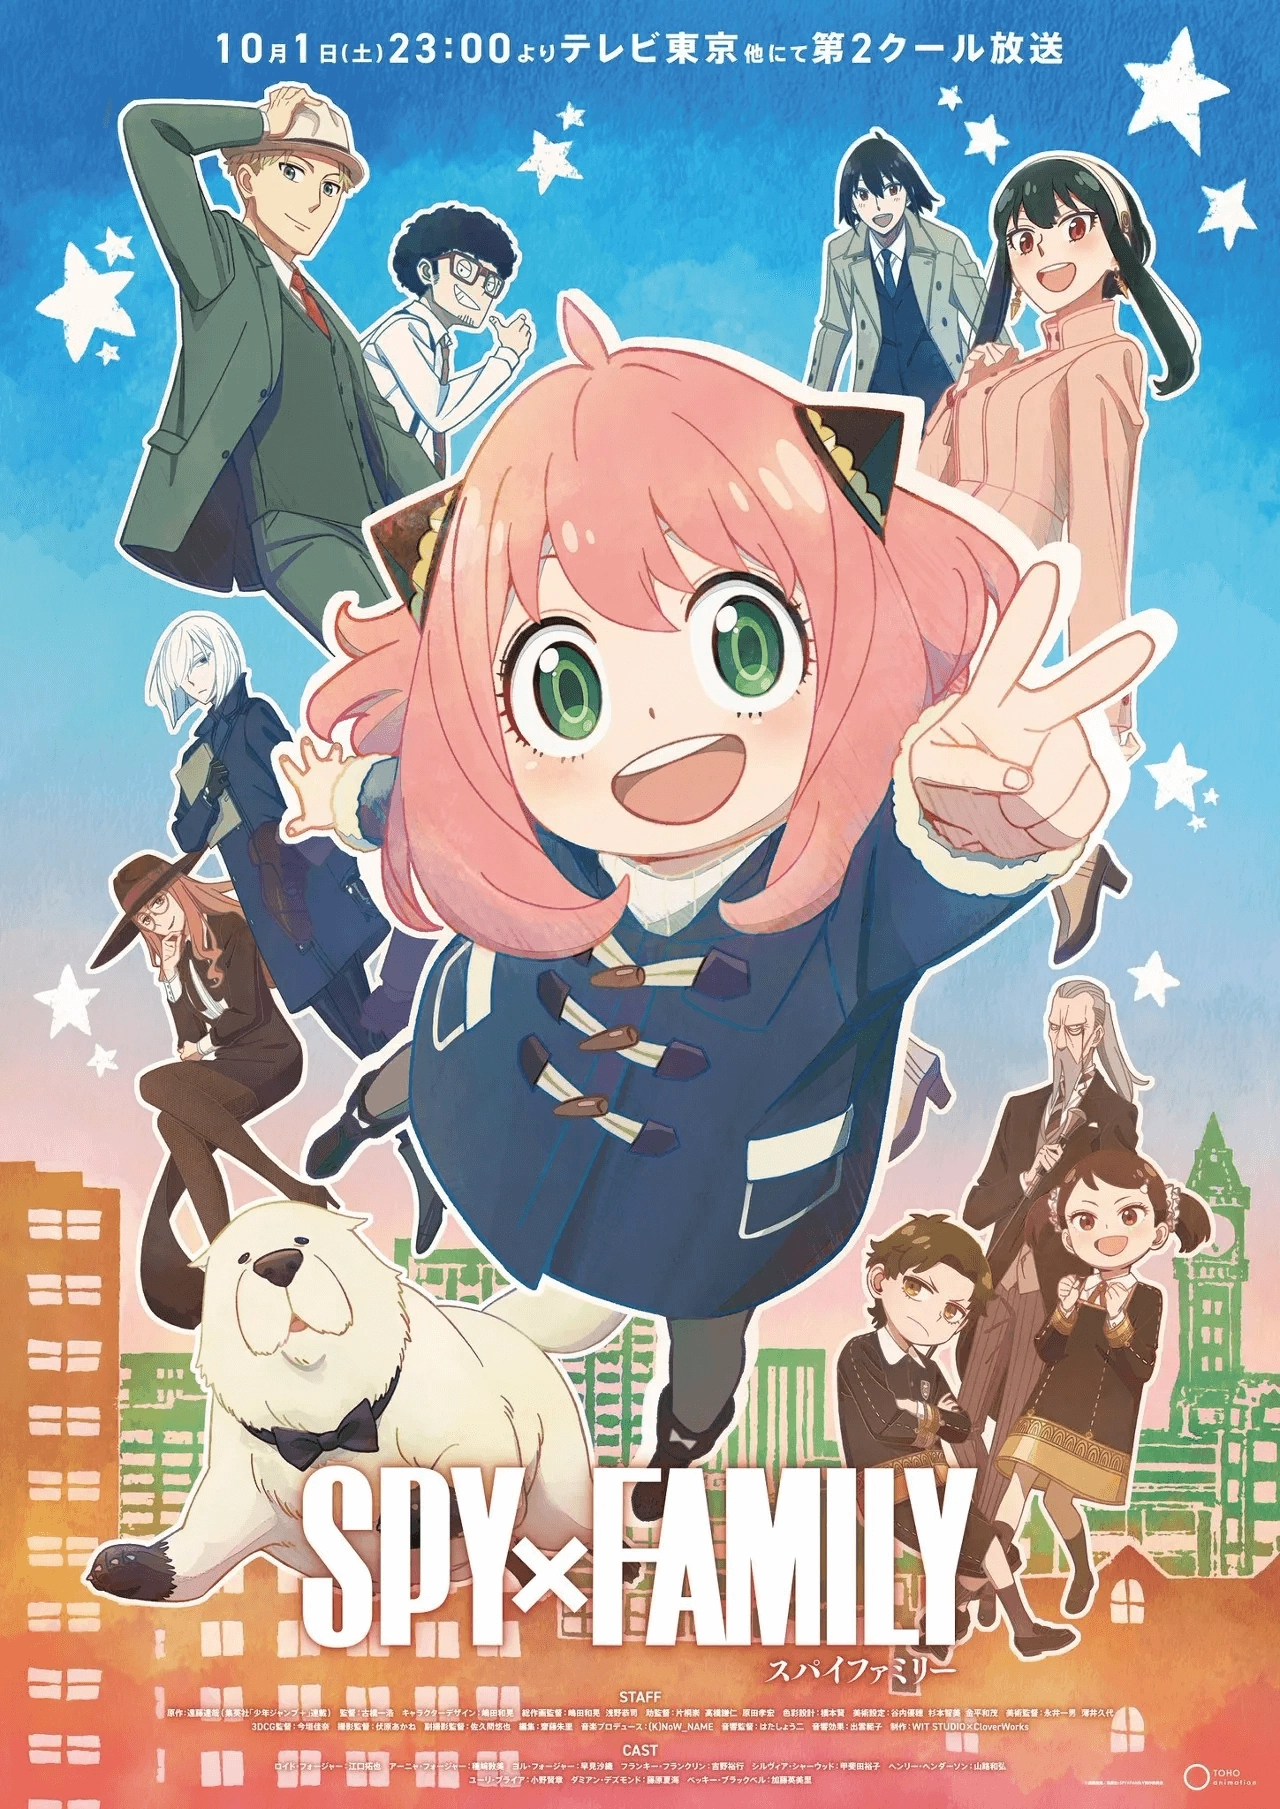 Opening de la segunda parte del anime Spy x Family